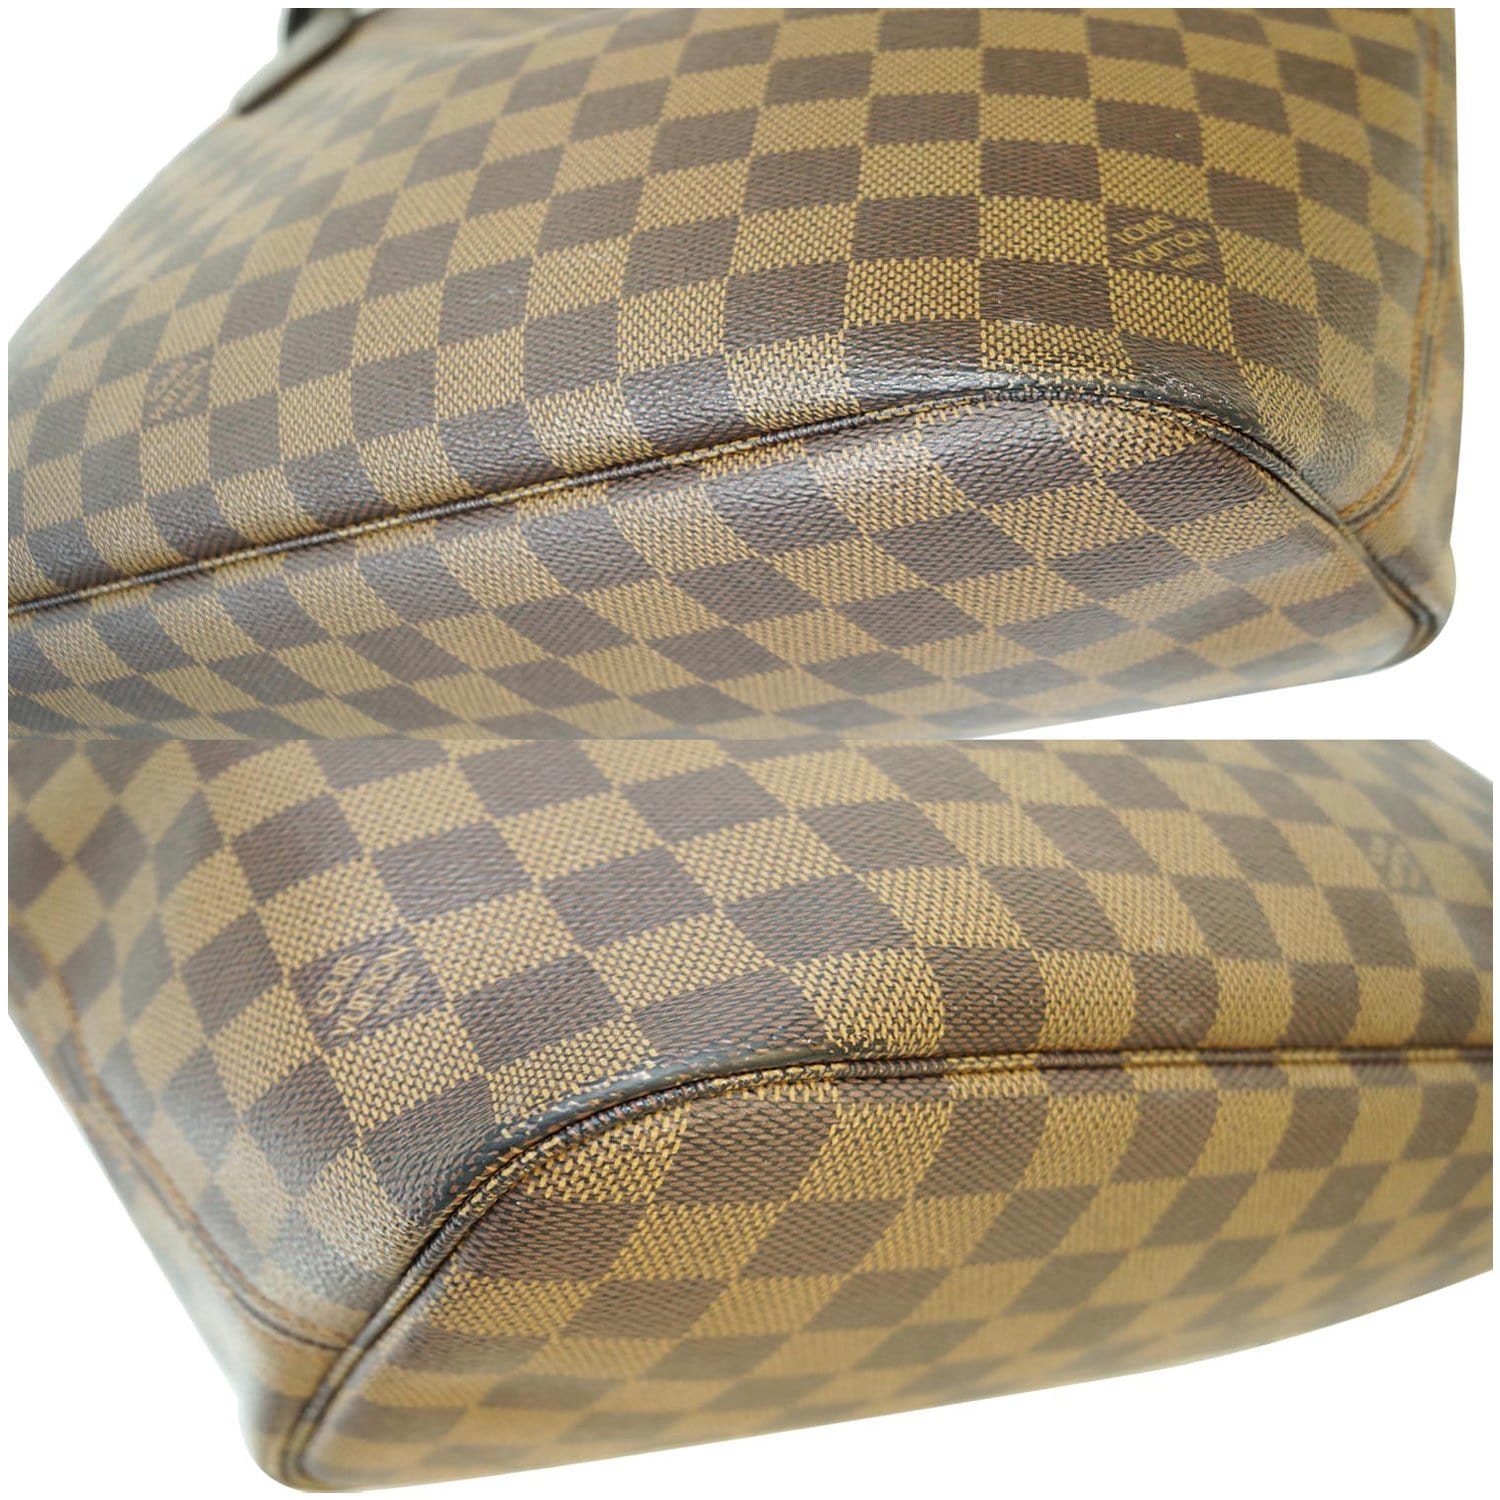 Brown Louis Vuitton Damier Ebene Totally MM Tote Bag – Designer Revival